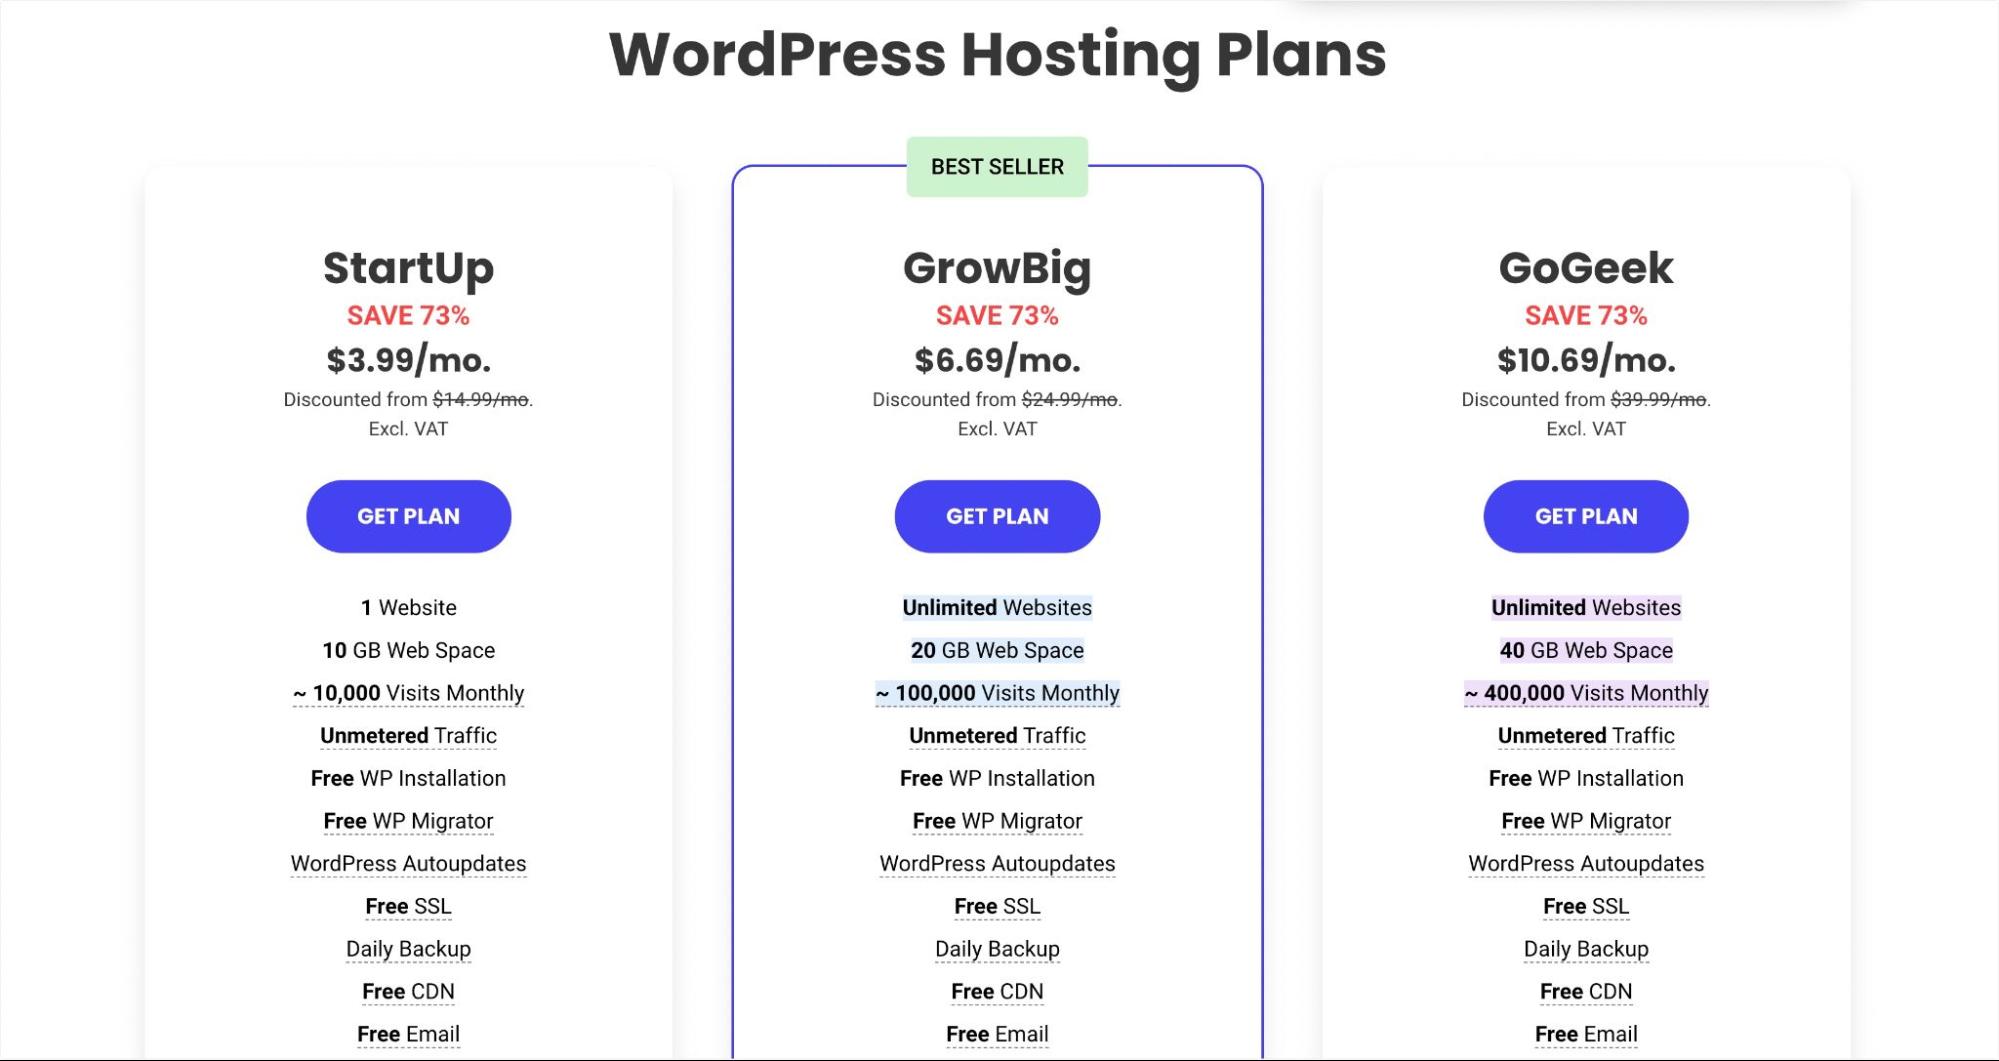 WordPress hosting plans for your business website